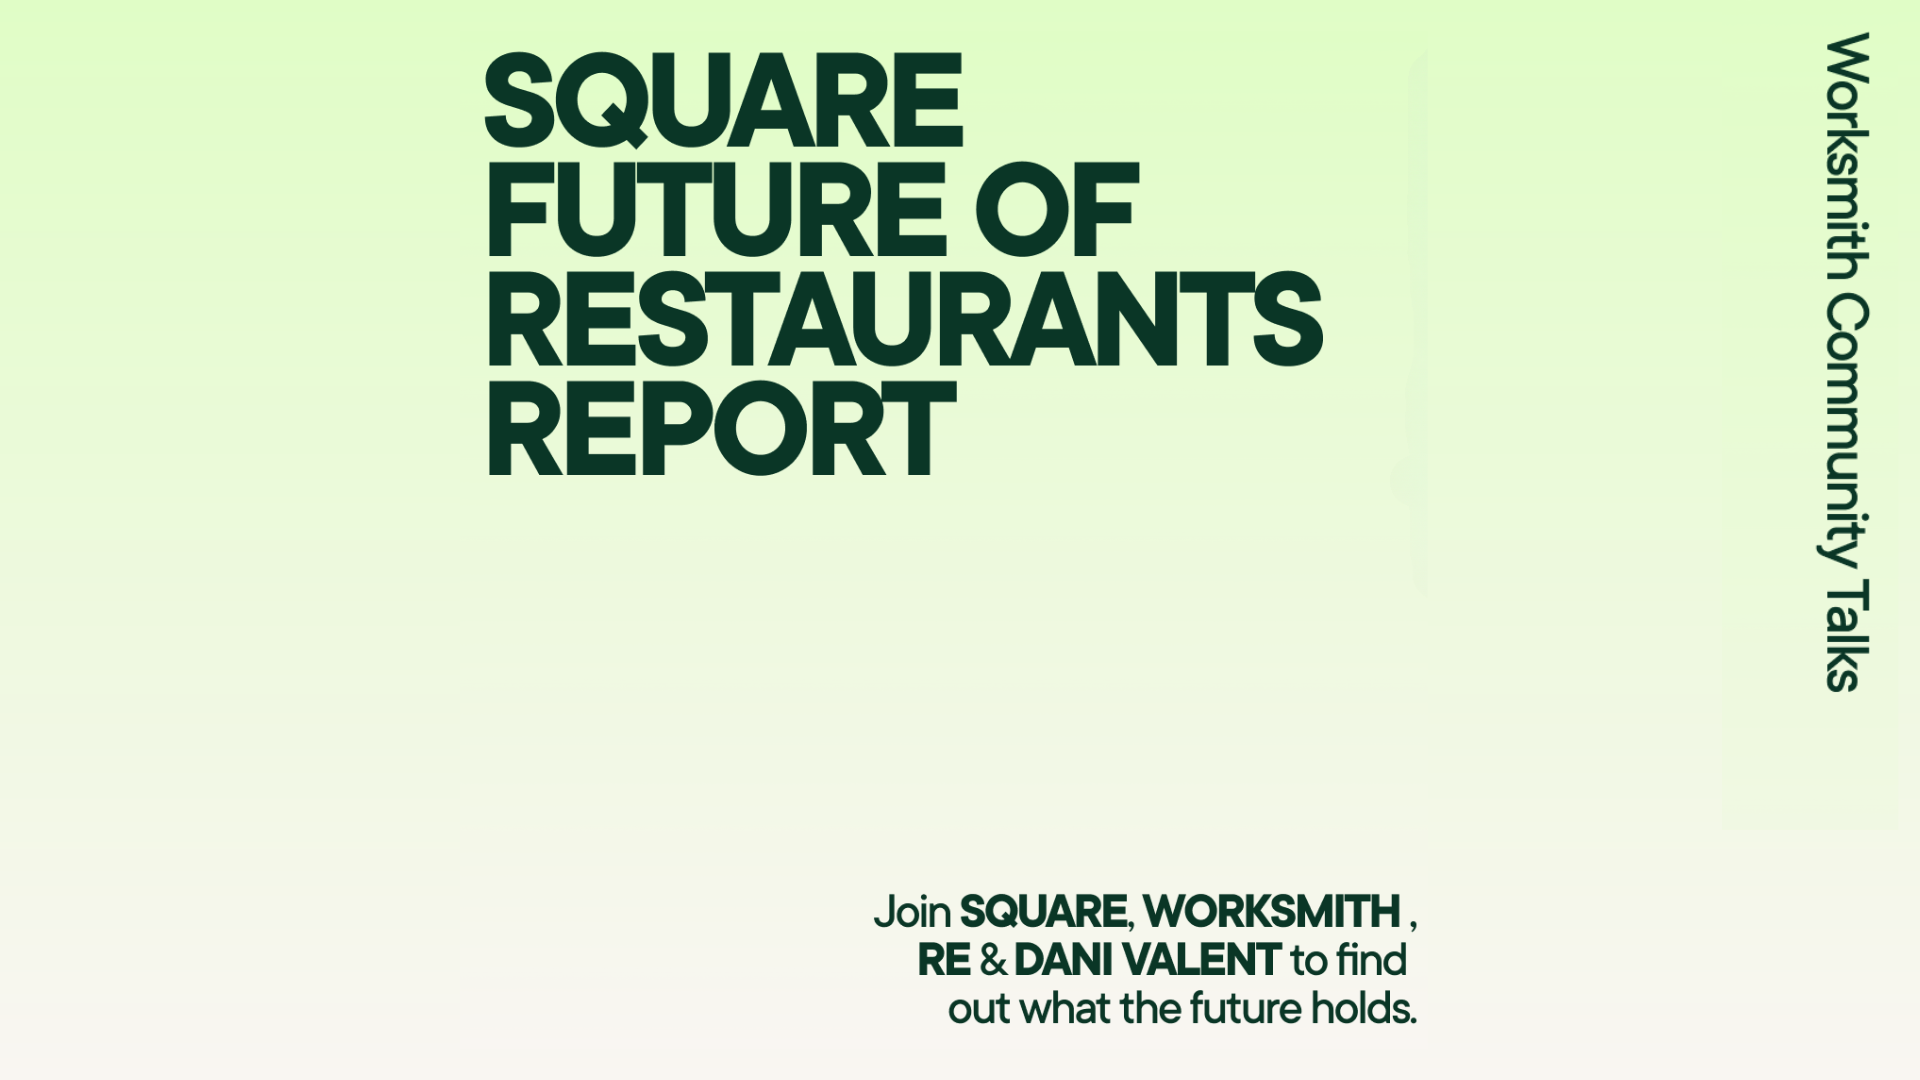 The Future of Restaurants